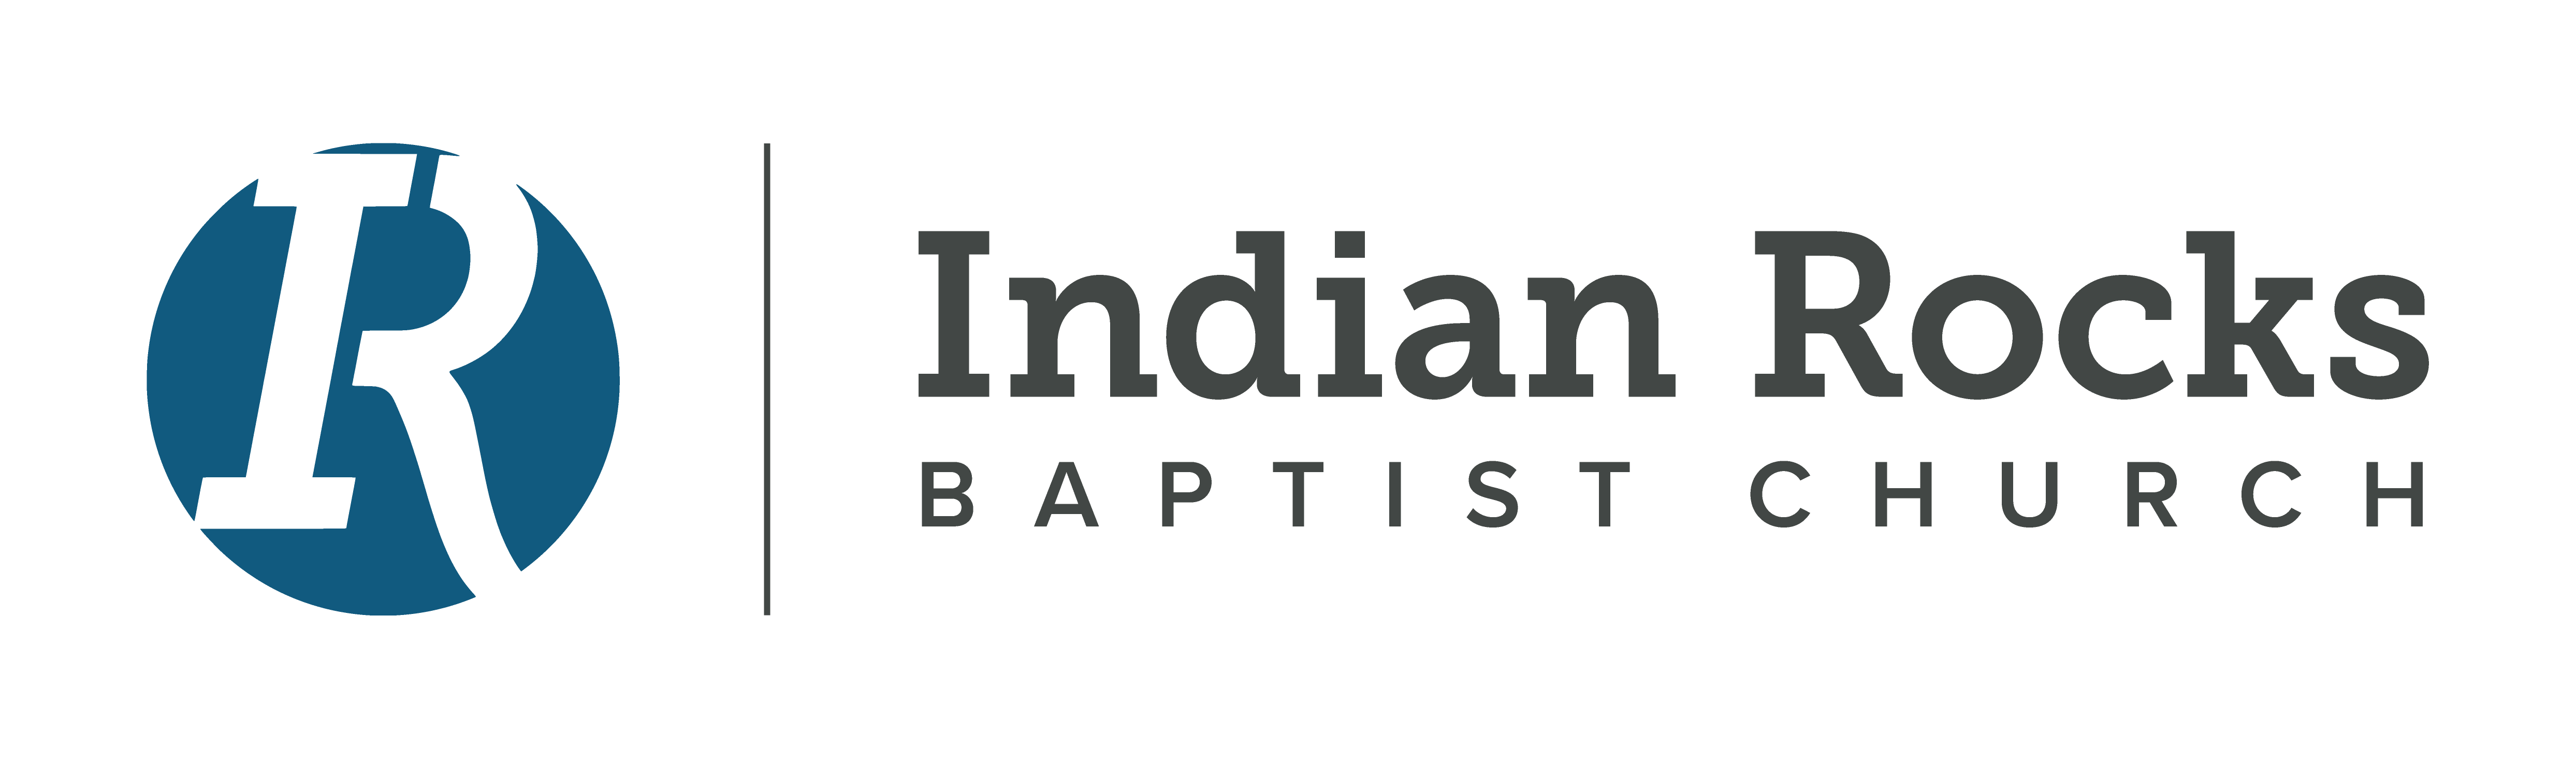 Indian Rocks Baptist Church logo